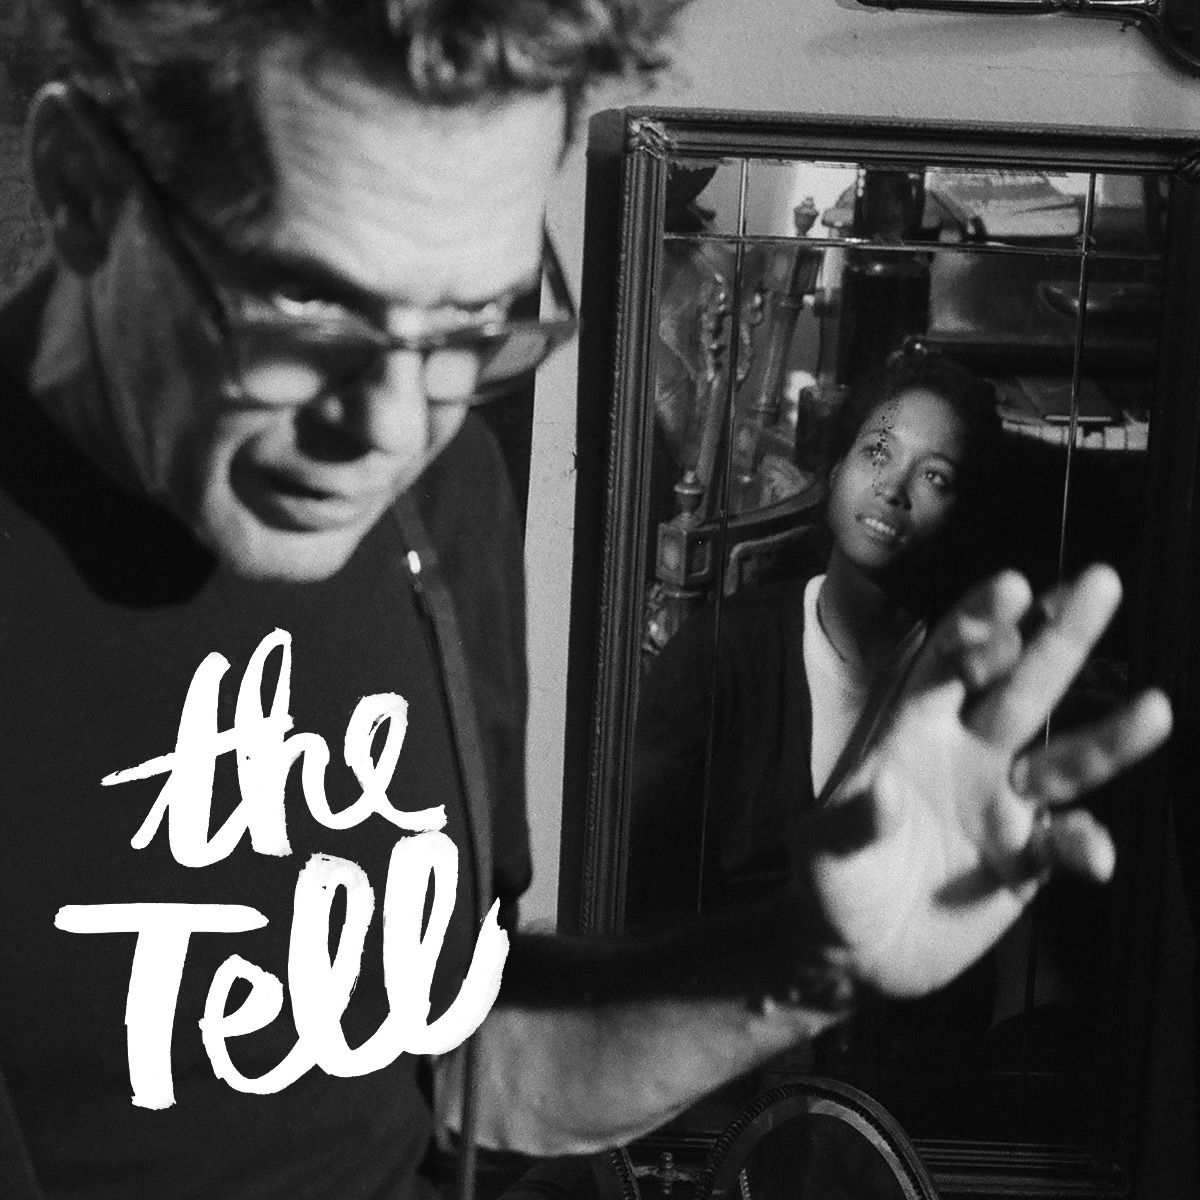 The Tell ep02 (Adam Green, Jenny Eliscu, Luke Temple)